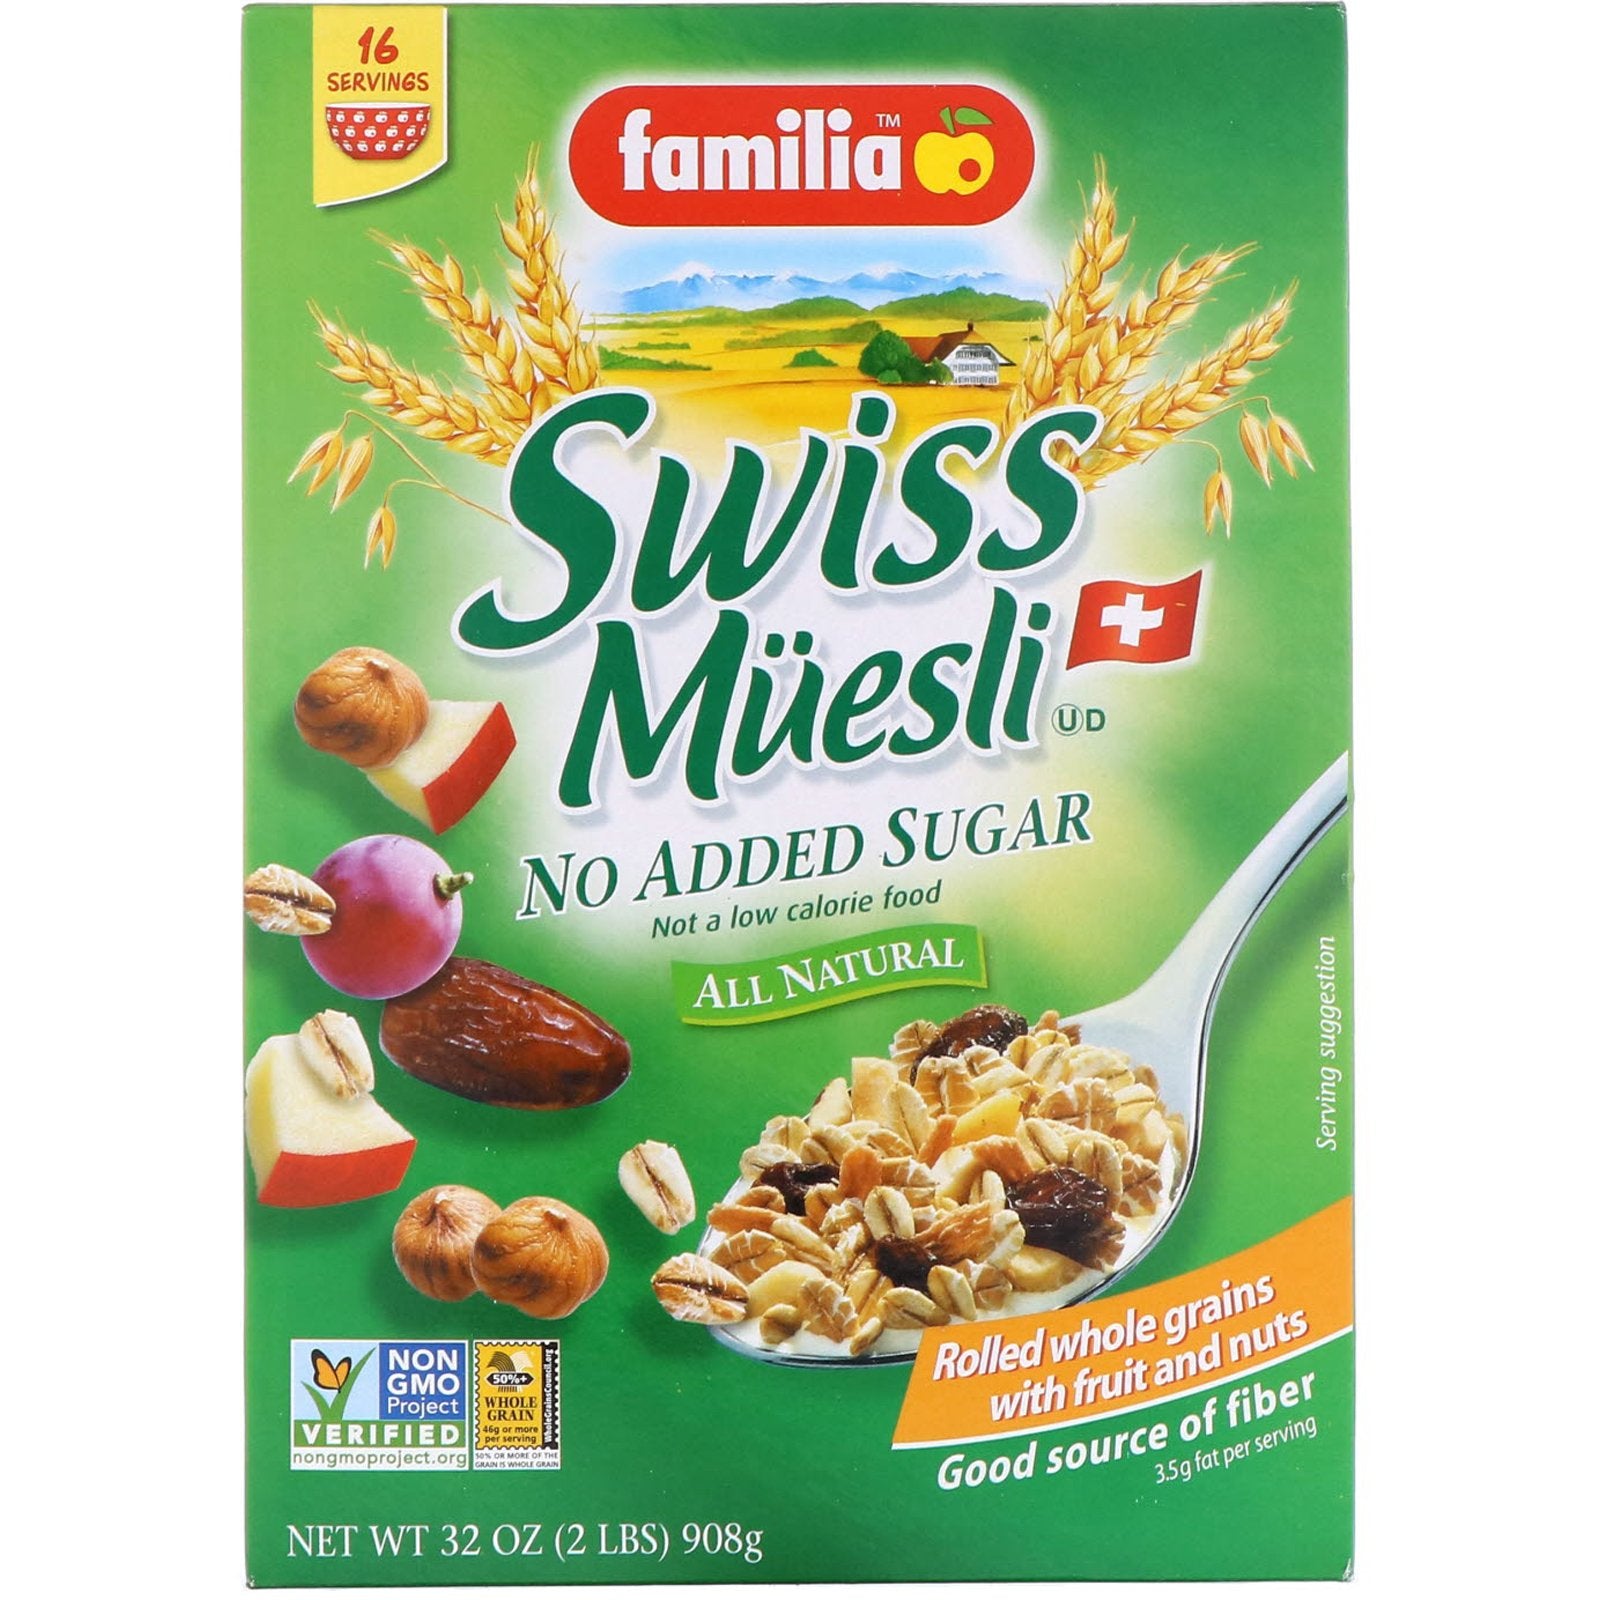 Swiss Müesli No Added Sugar (Not a low calorie food) - bio-familia